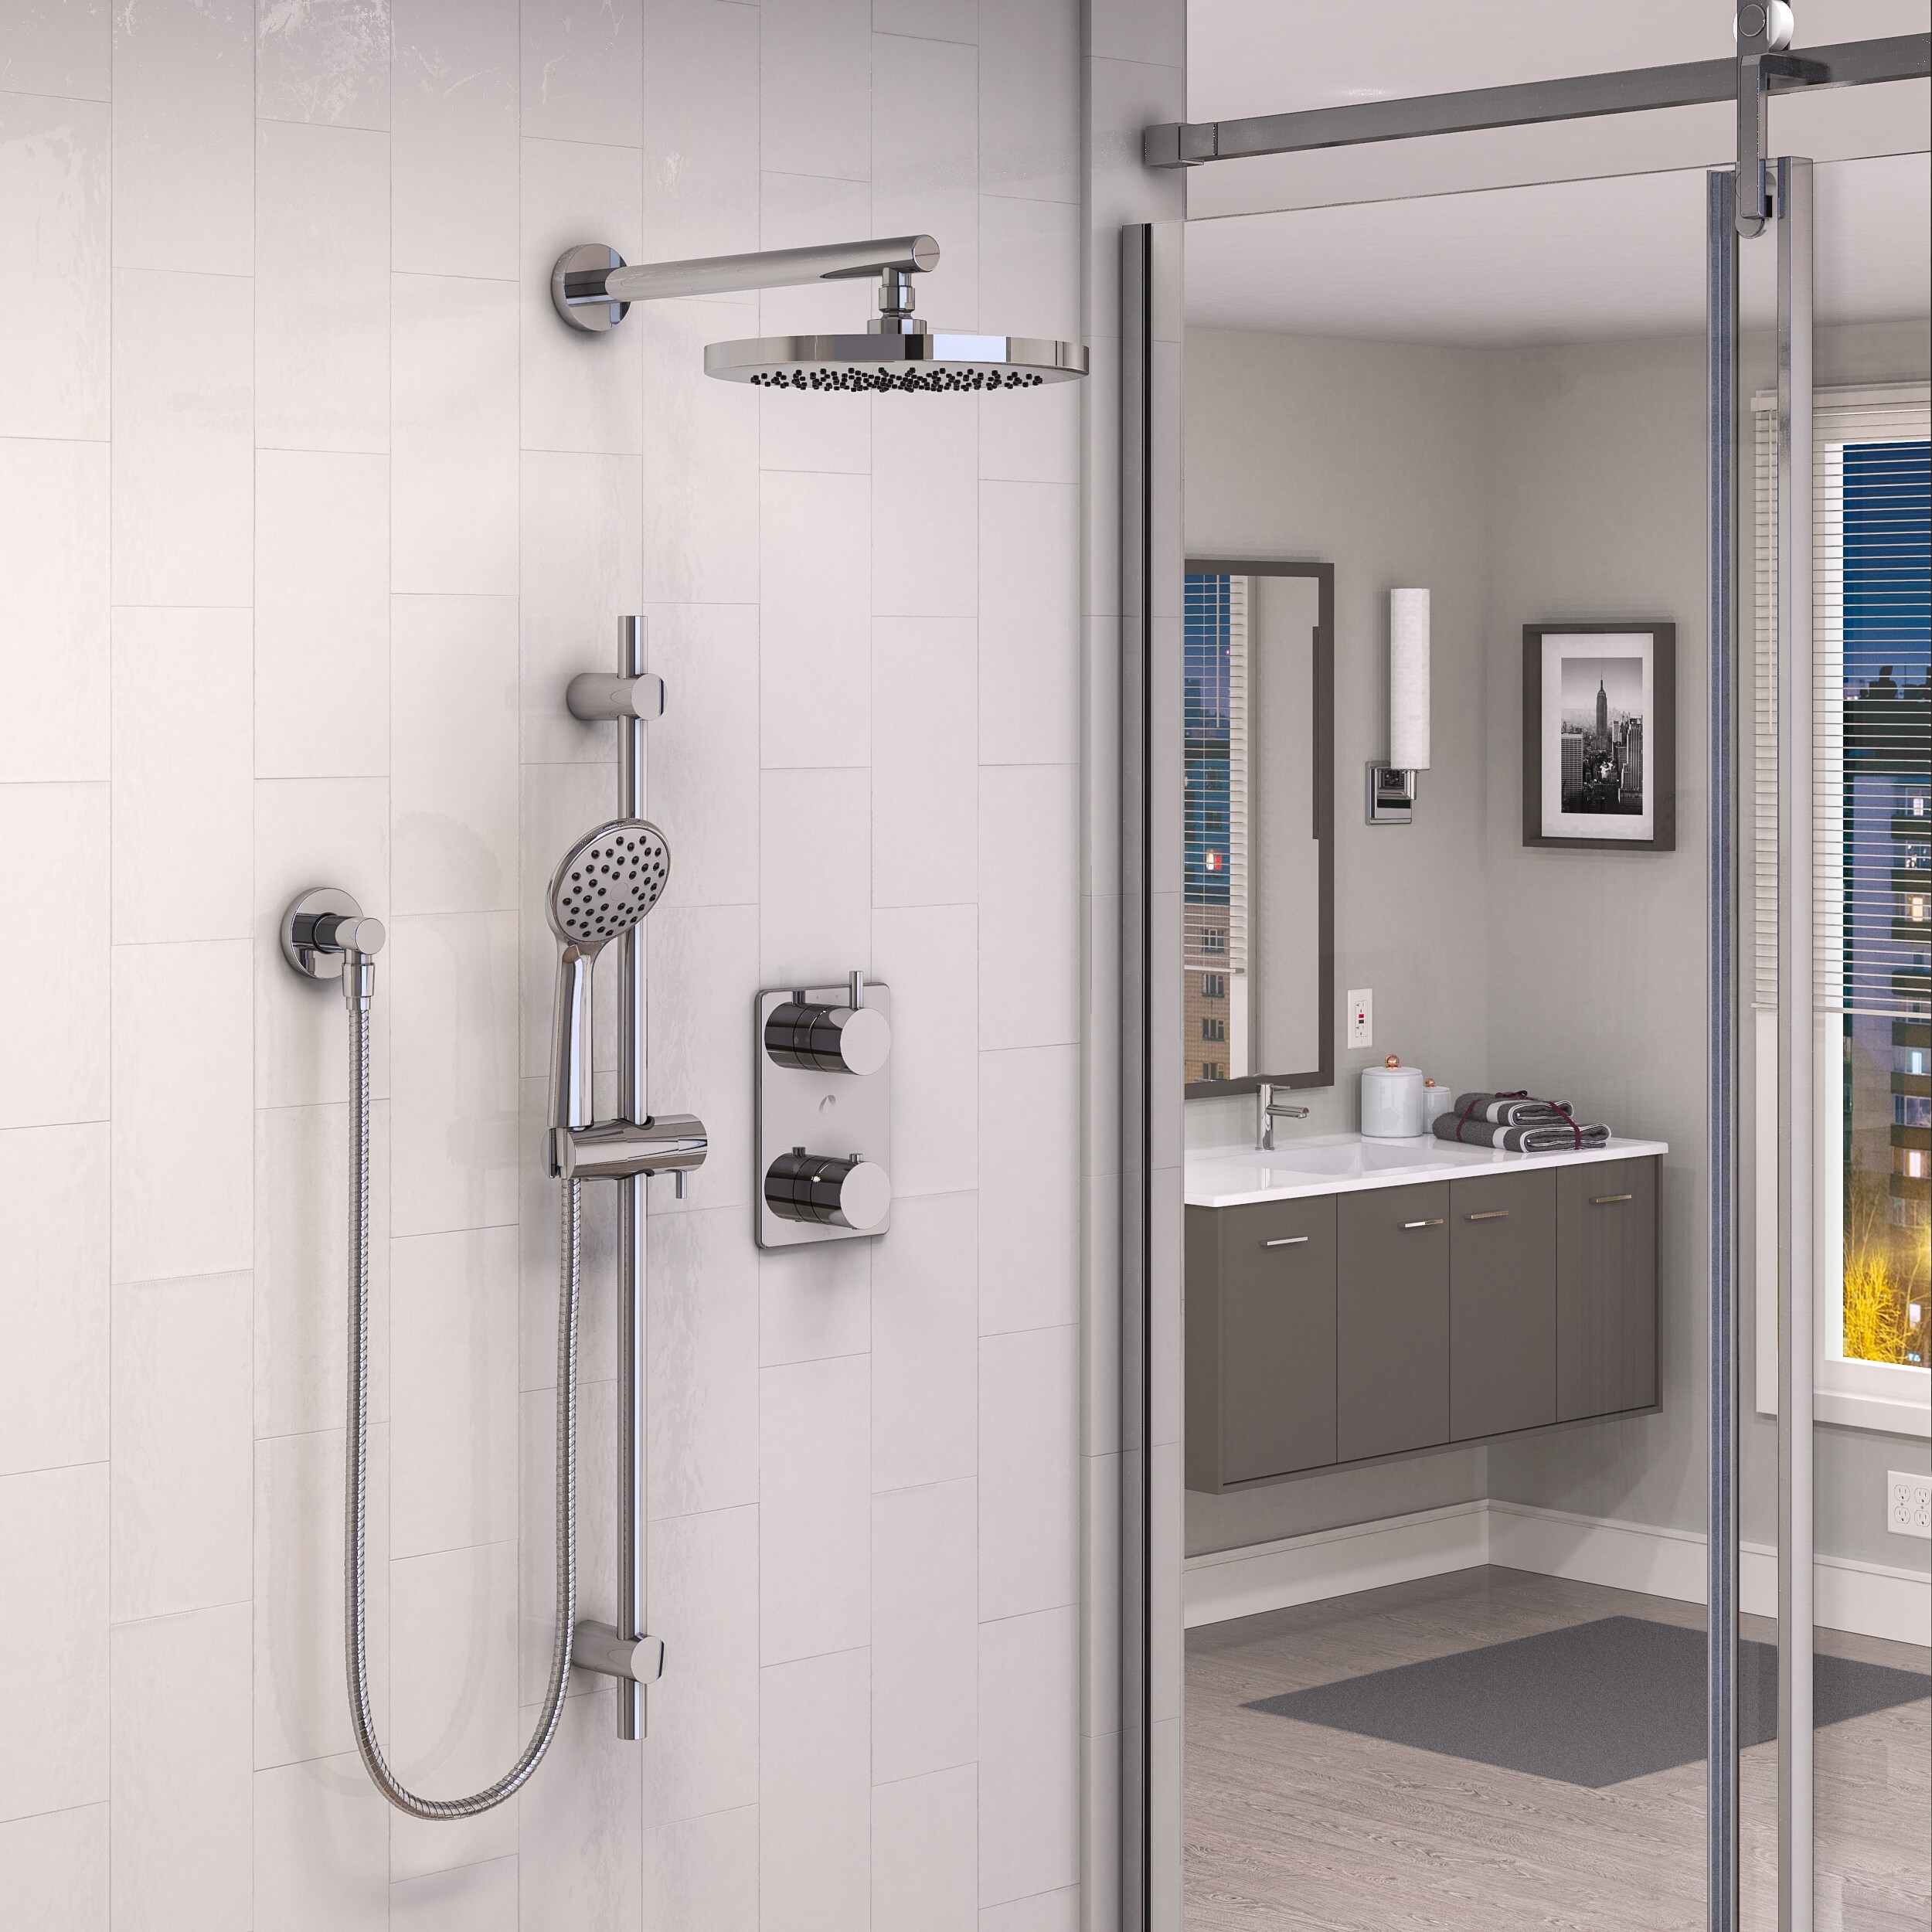 2 Way Bathroom Shower Tub Faucet Control Valve Diverter Valve Mixer $160 Retail 